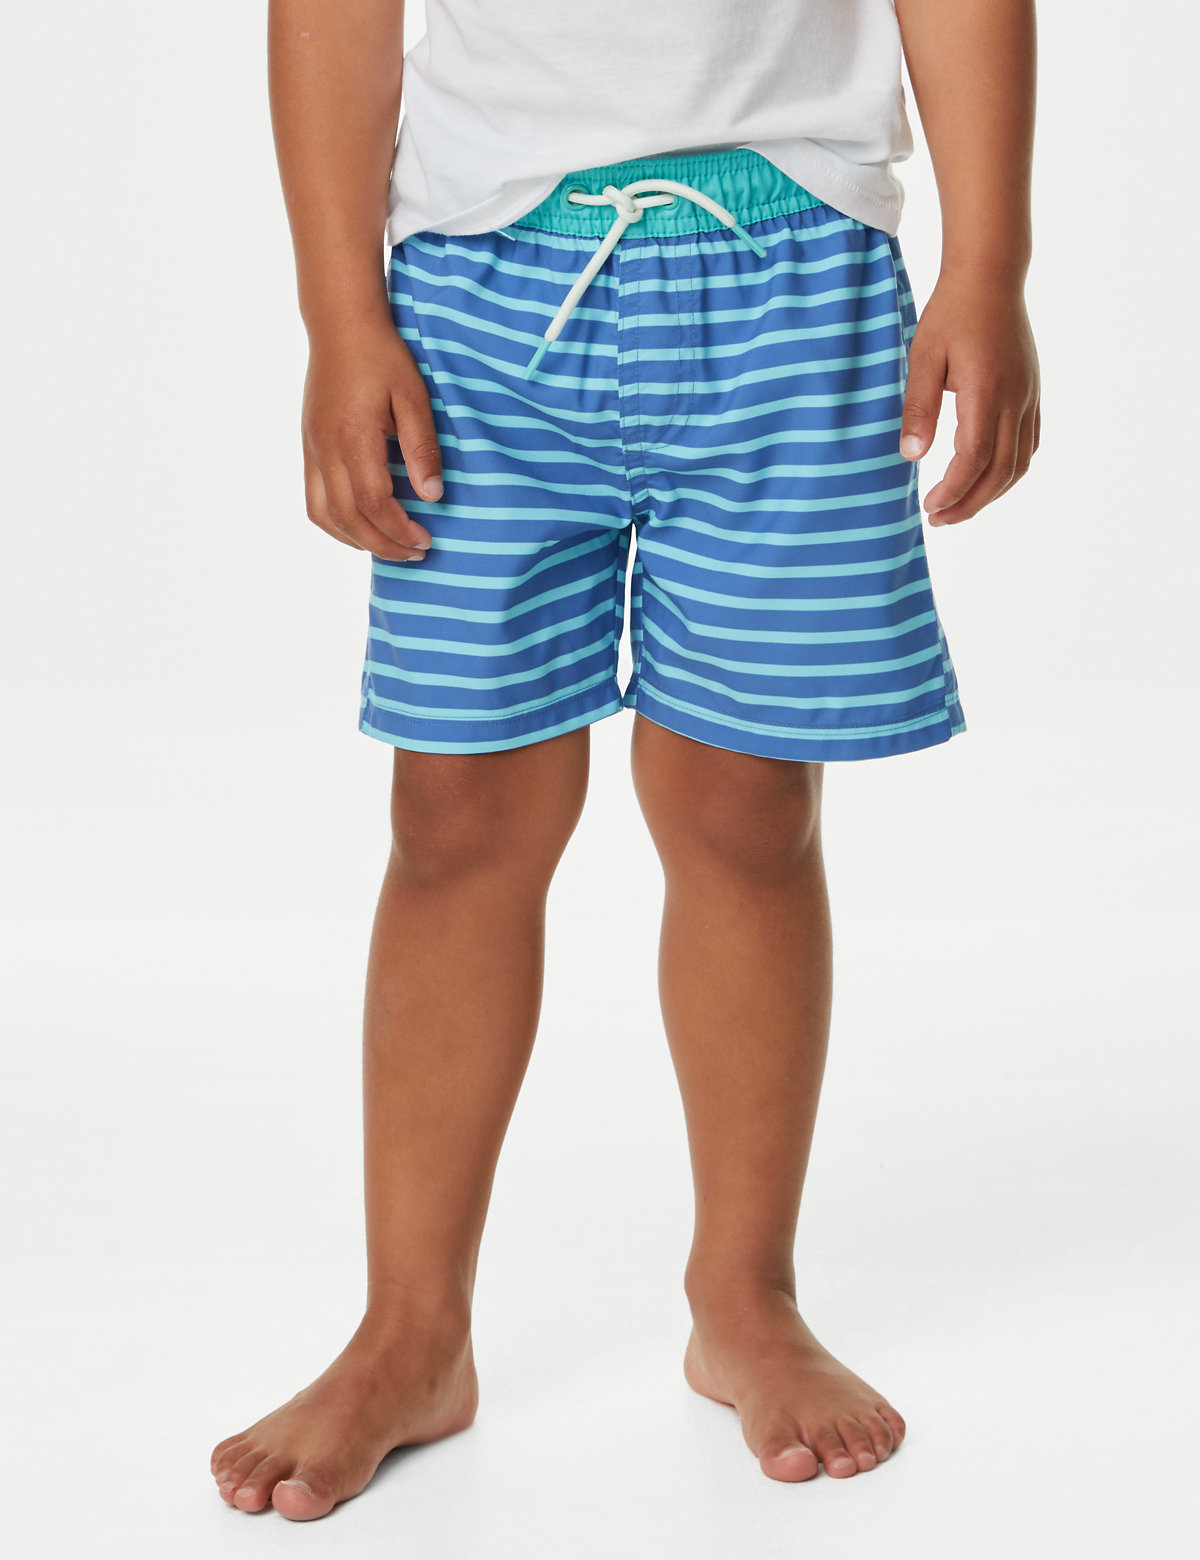 Striped Swim Shorts (2-8 Yrs)